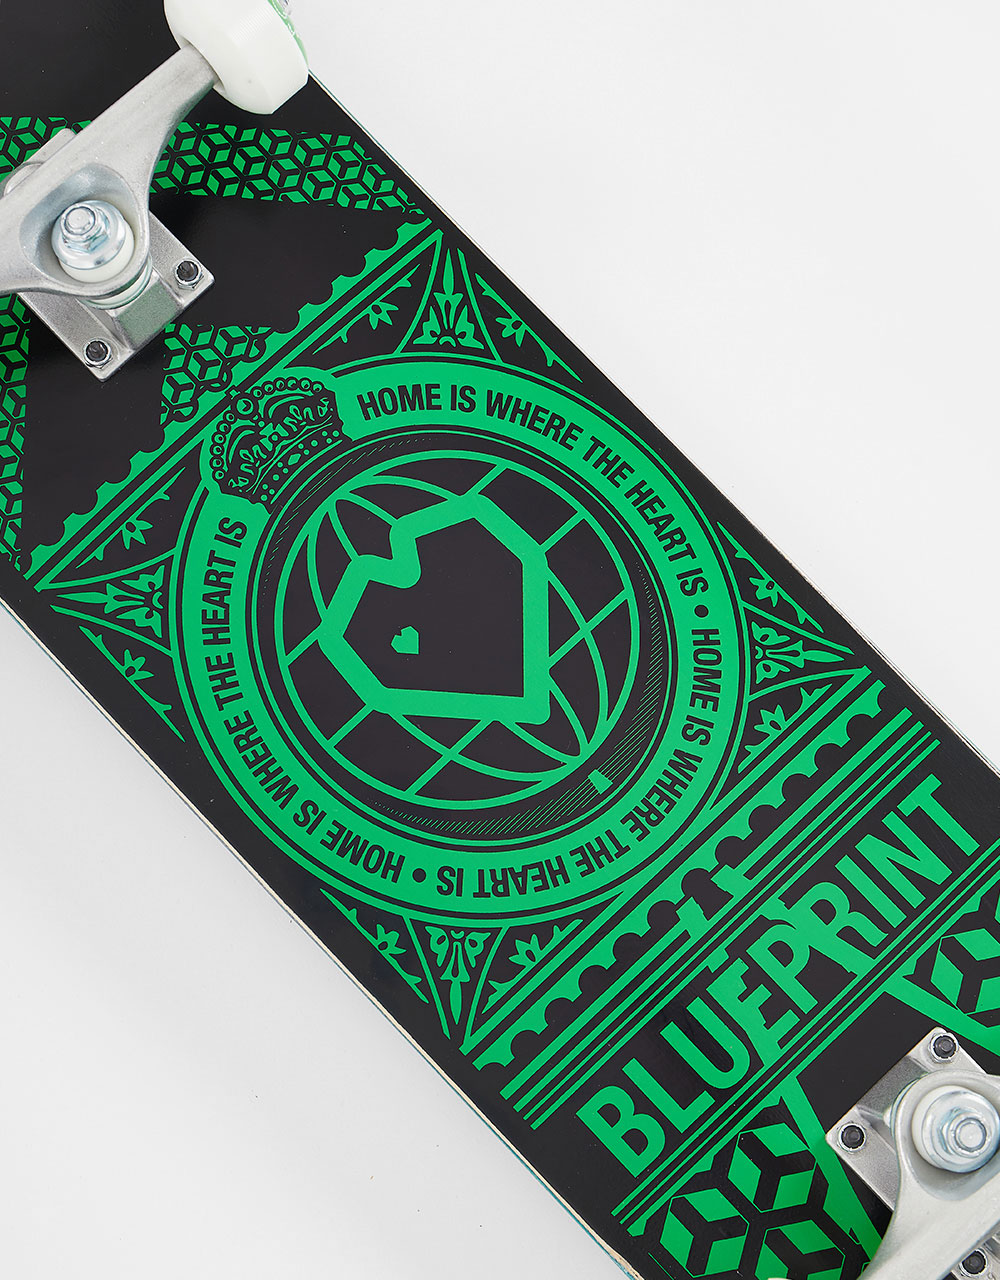 Blueprint Home Heart Black/Green Complete Skateboard - 8"